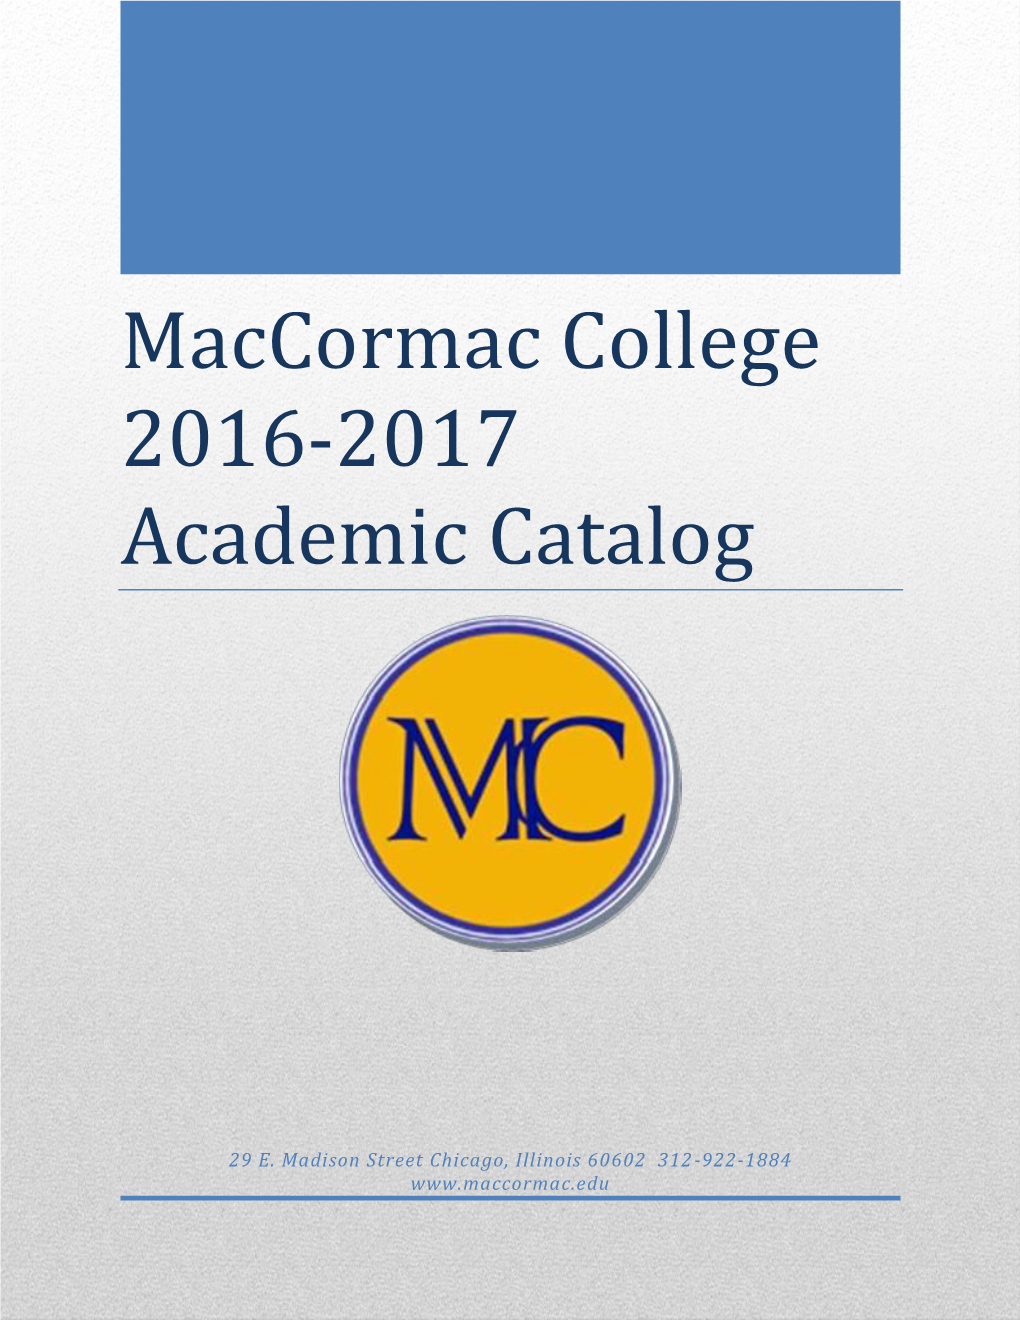 Maccormac College 2016-2017 Academic Catalog